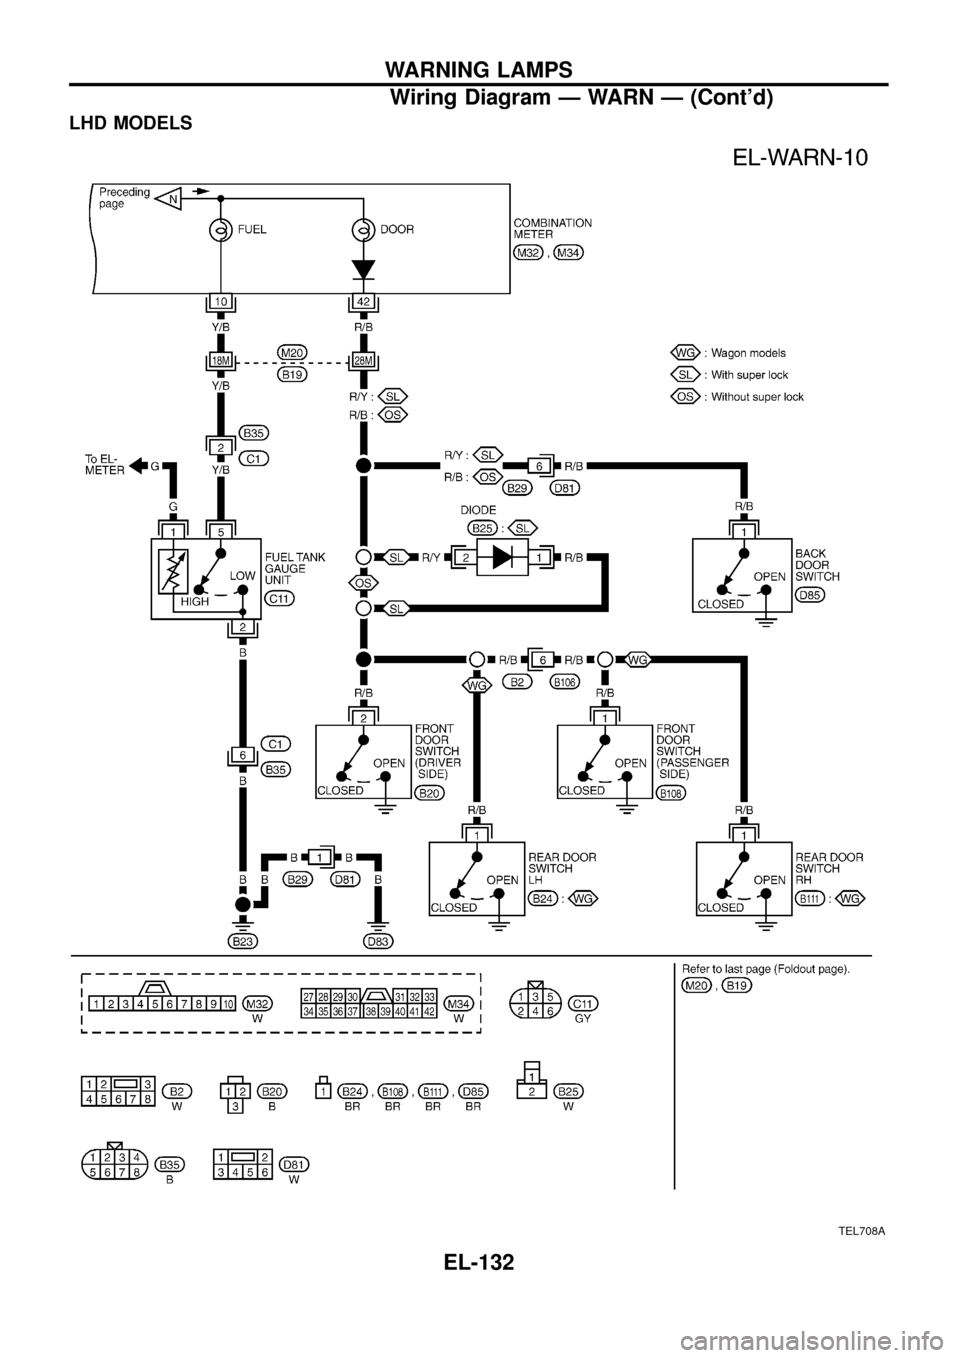 NISSAN PATROL 1998 Y61 / 5.G Electrical System Owners Manual LHD MODELS
TEL708A
WARNING LAMPS
Wiring Diagram Ð WARN Ð (Contd)
EL-132 